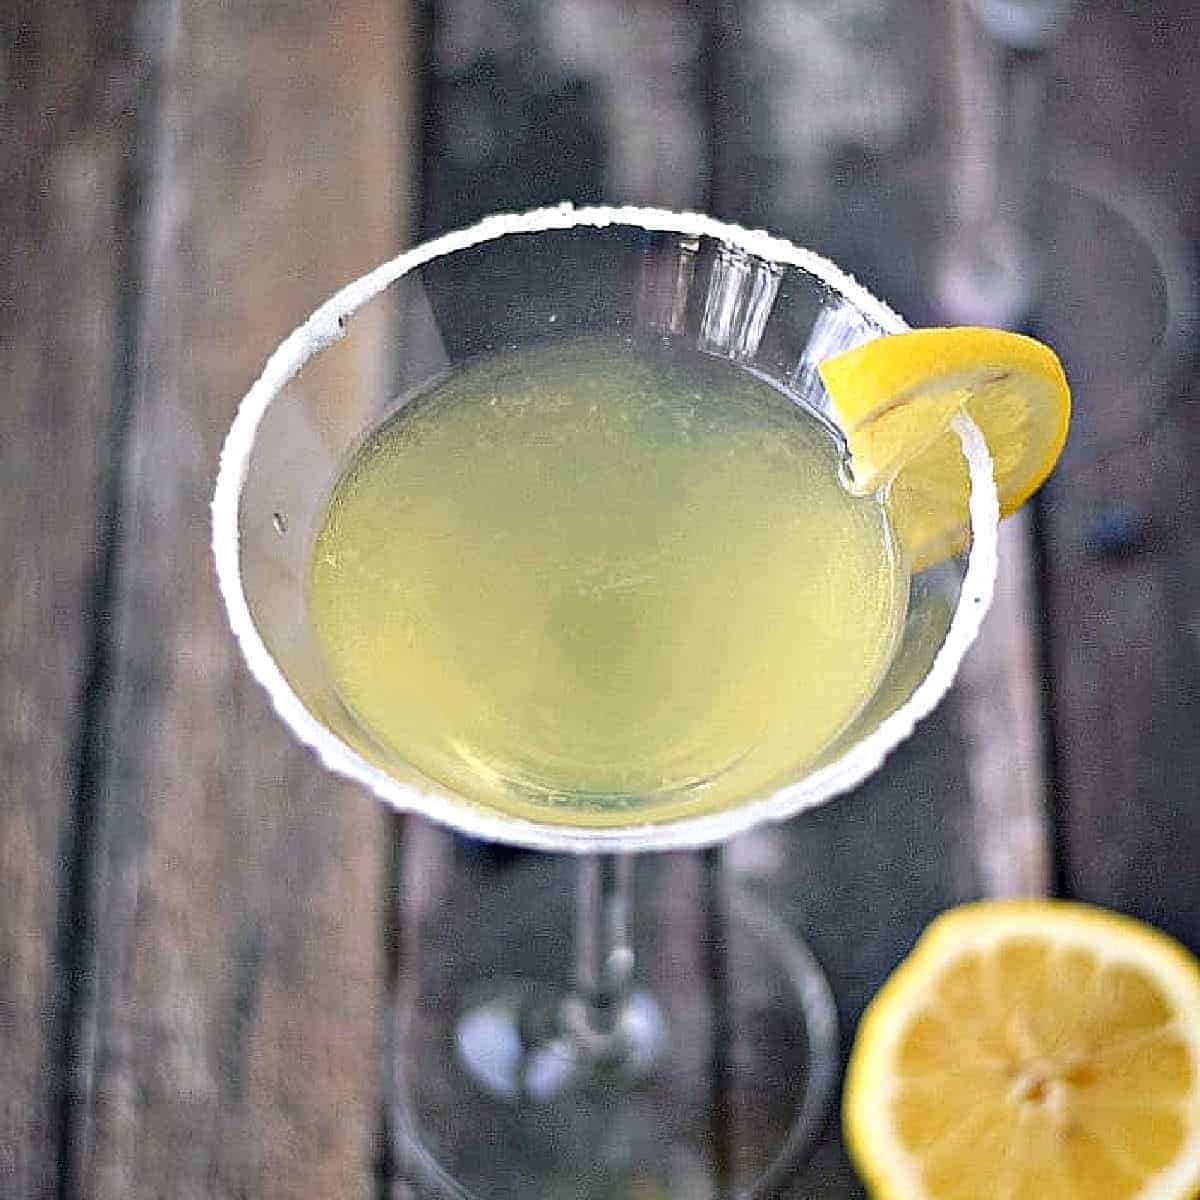 Lemon Drop Martini with a sugar coated rim and lemon wedge garnish.